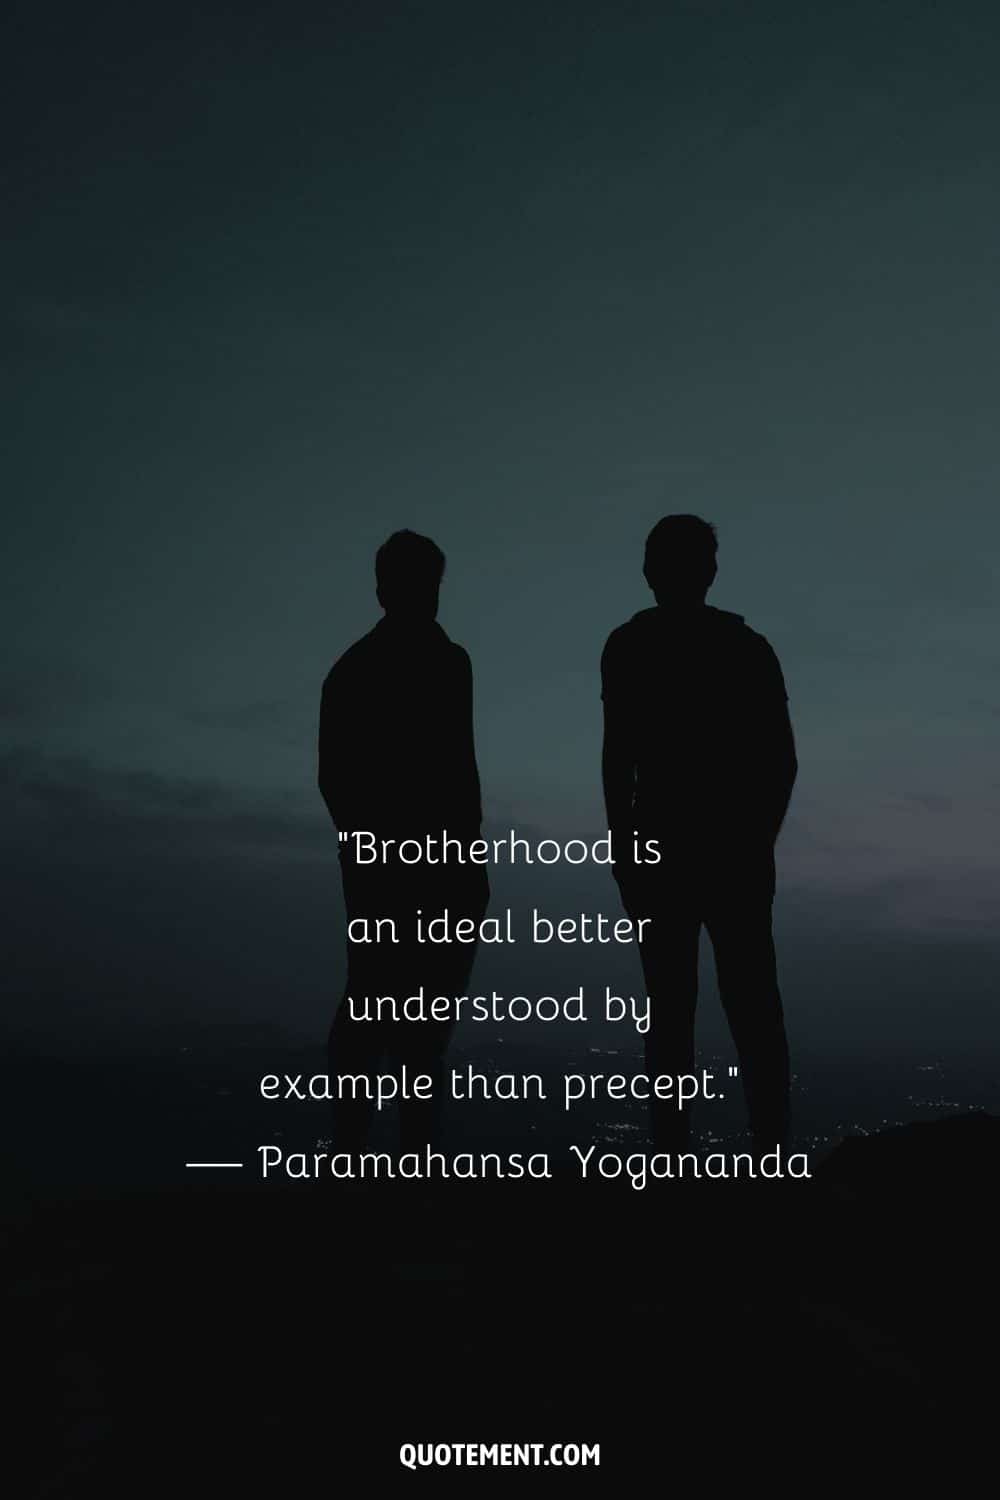 “Brotherhood is an ideal better understood by example than precept.” — Paramahansa Yogananda